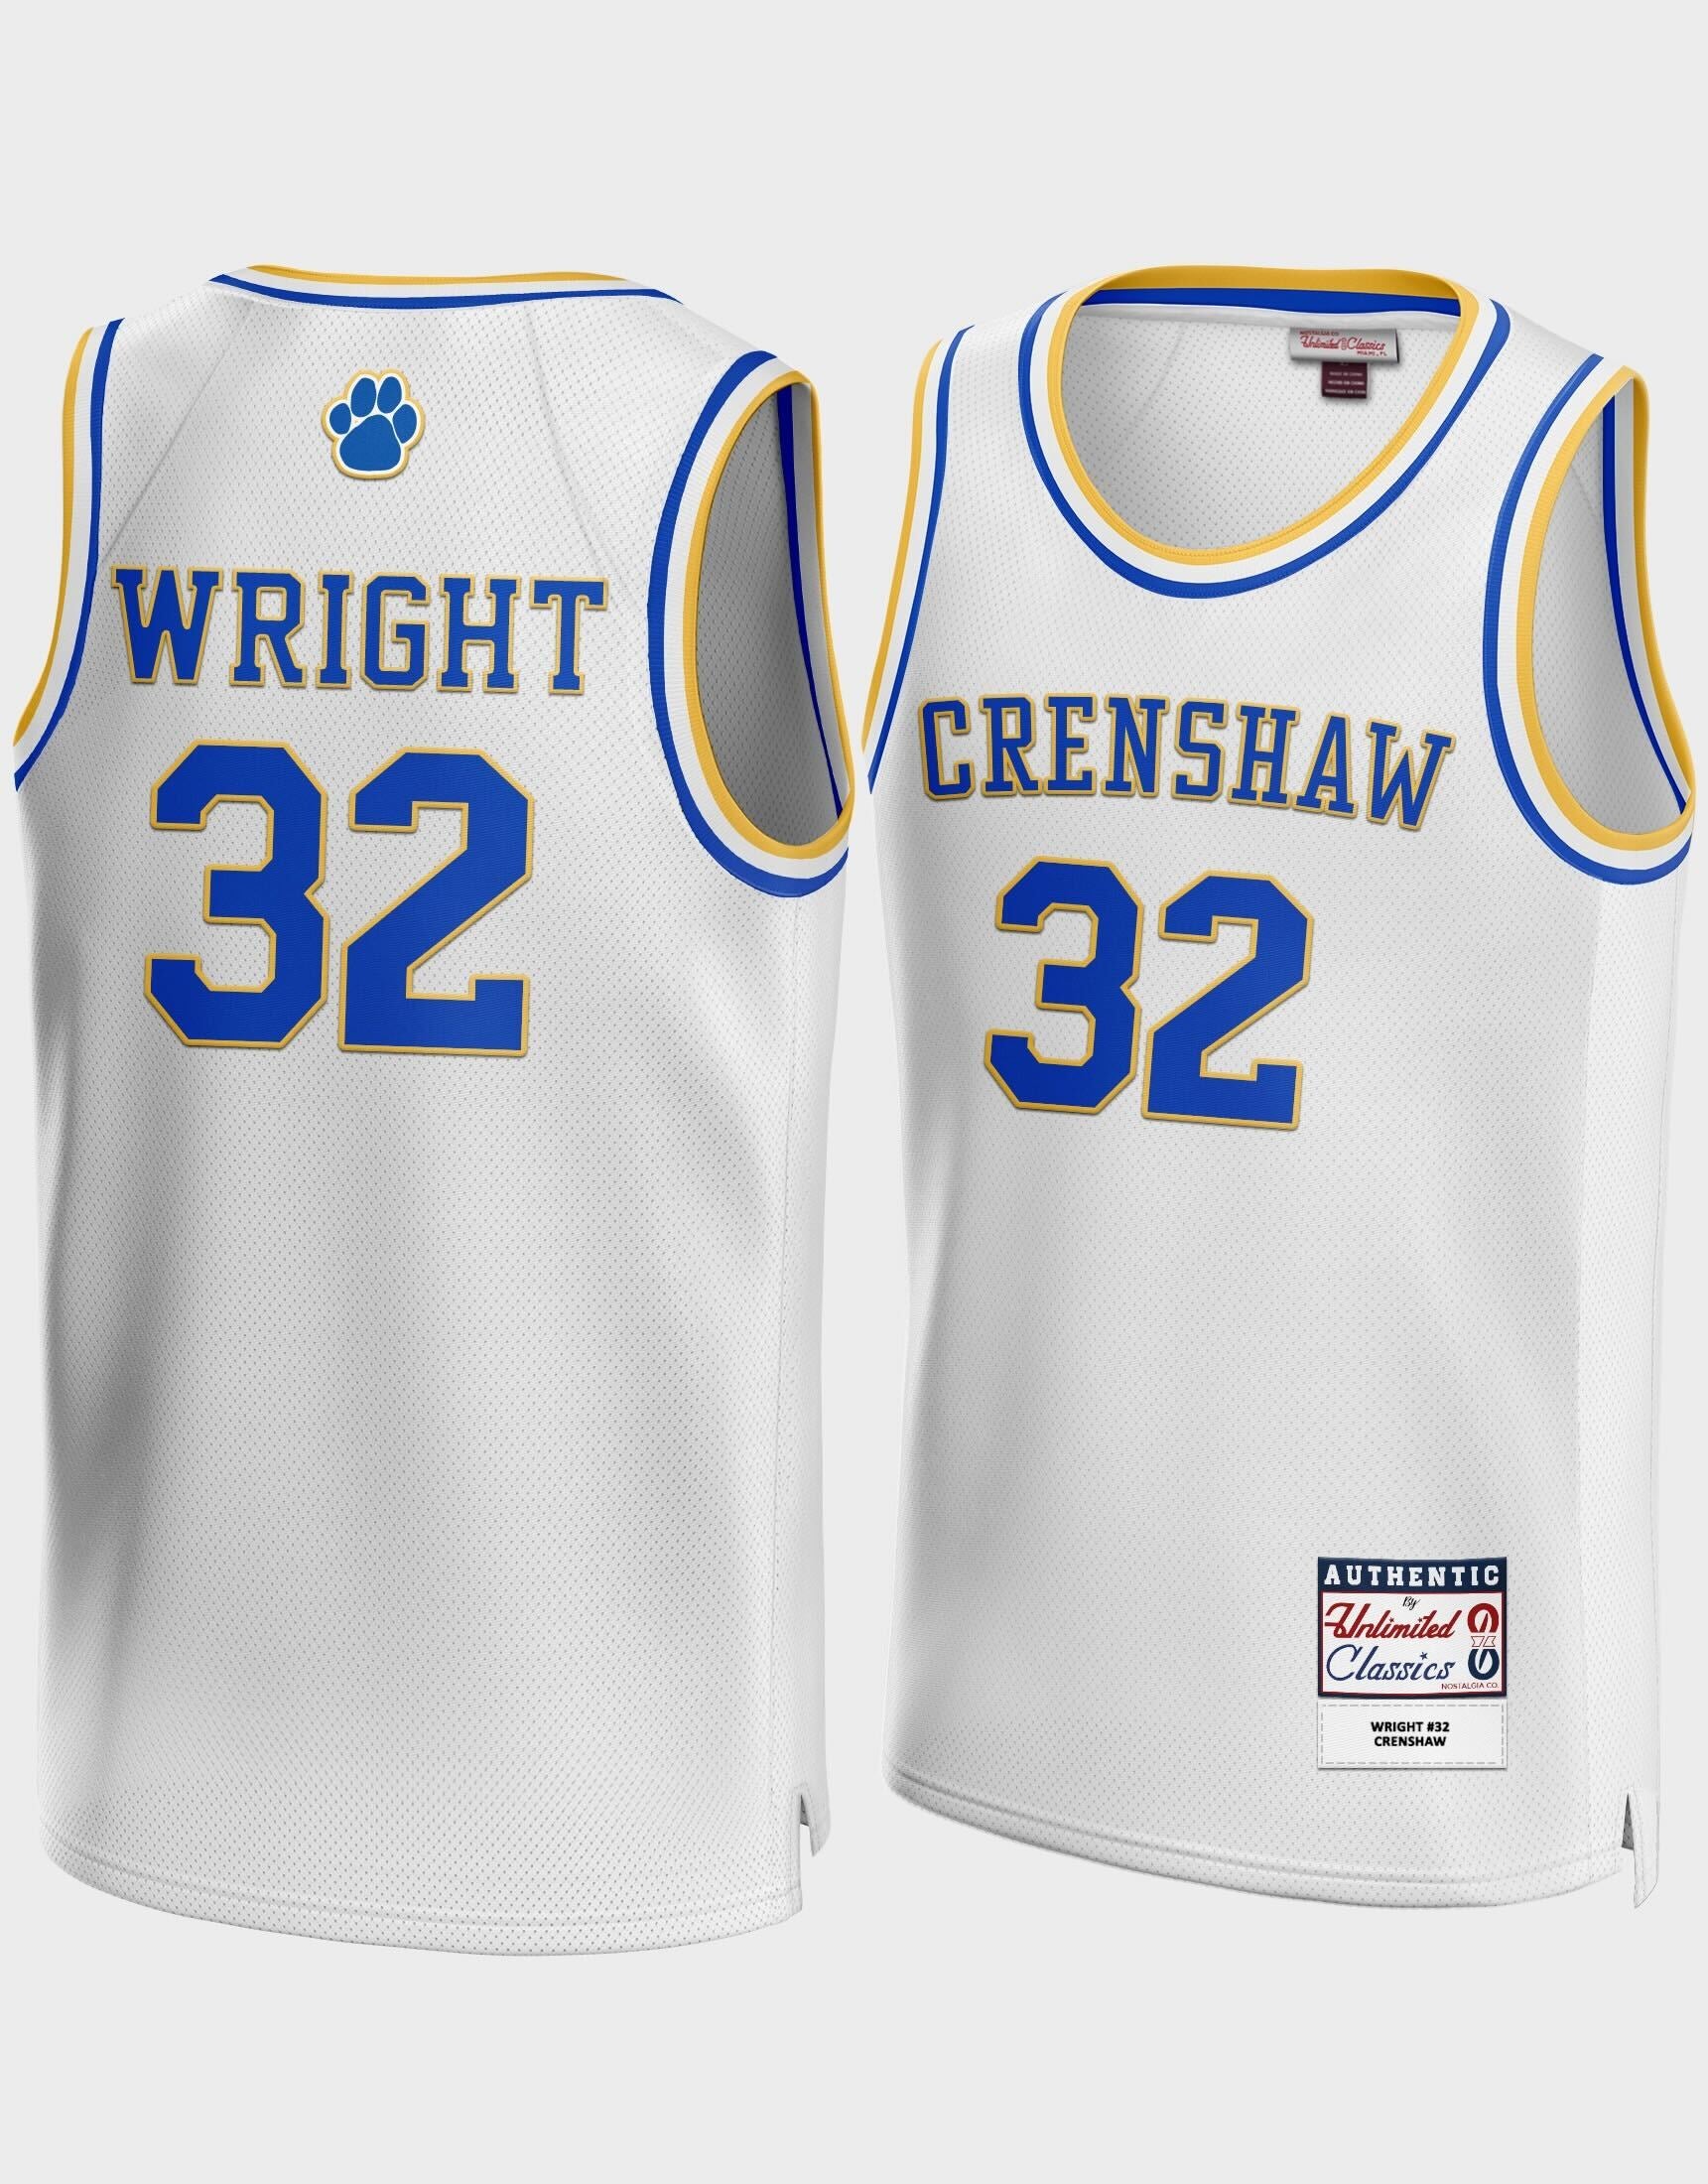 Crenshaw #32 High School Love And Basketball Jersey, Retro